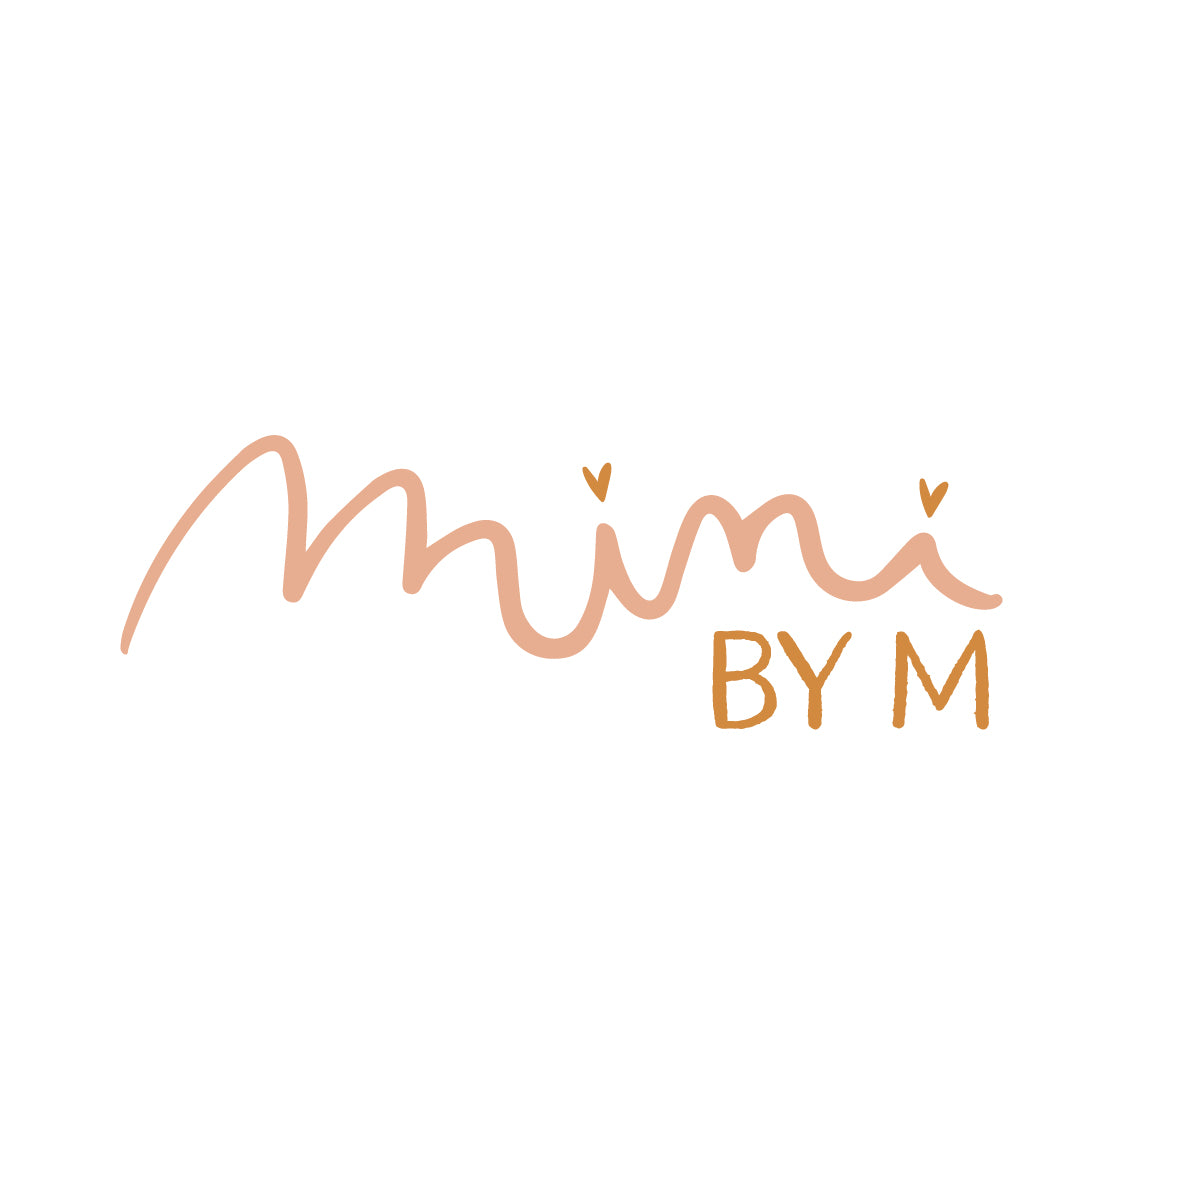 Mini by m